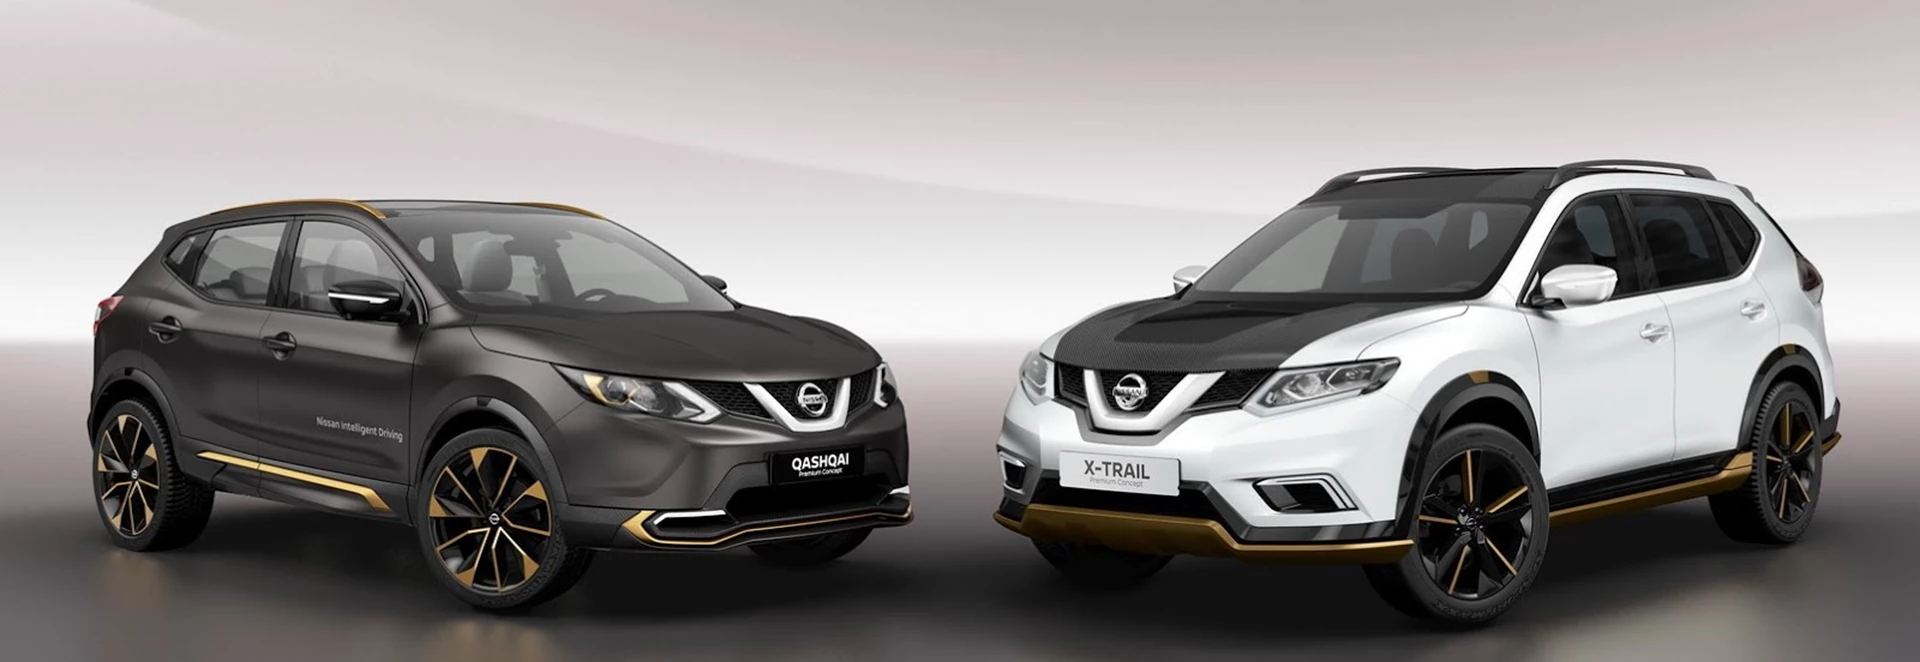 Nissan Qashqai and X-Trail get Premium Concept